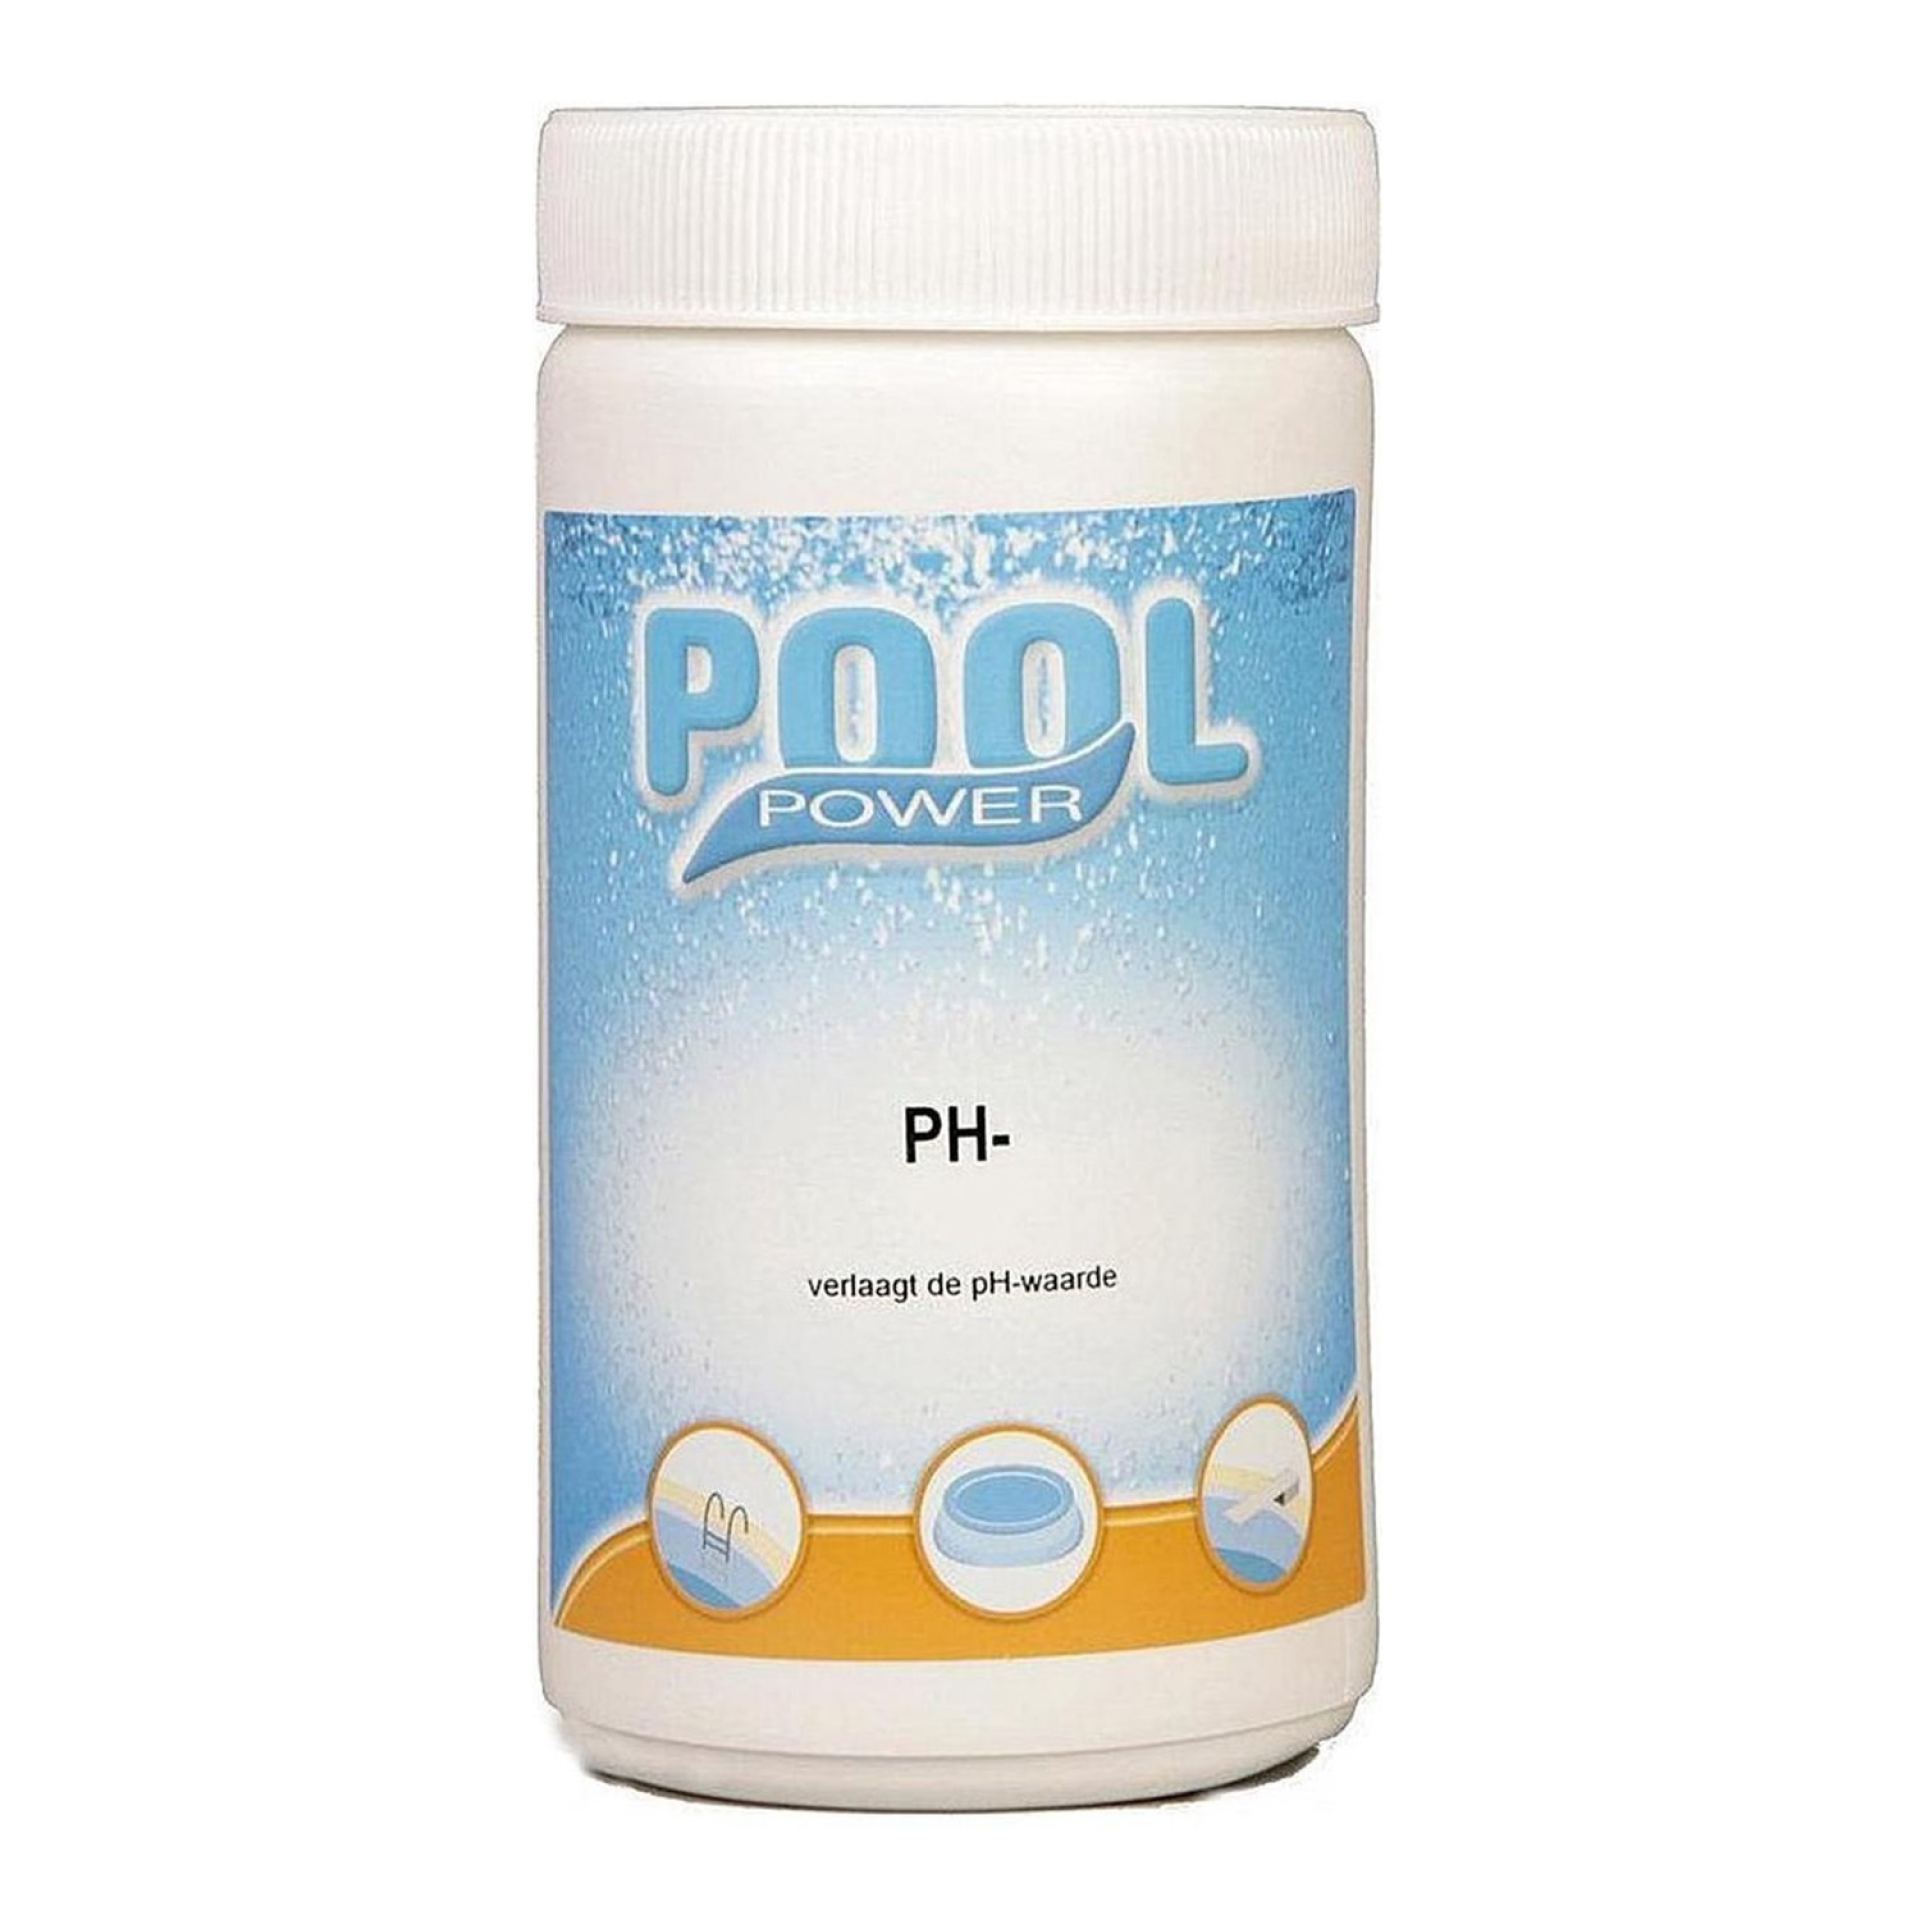 Pool power PH- 1,5kg